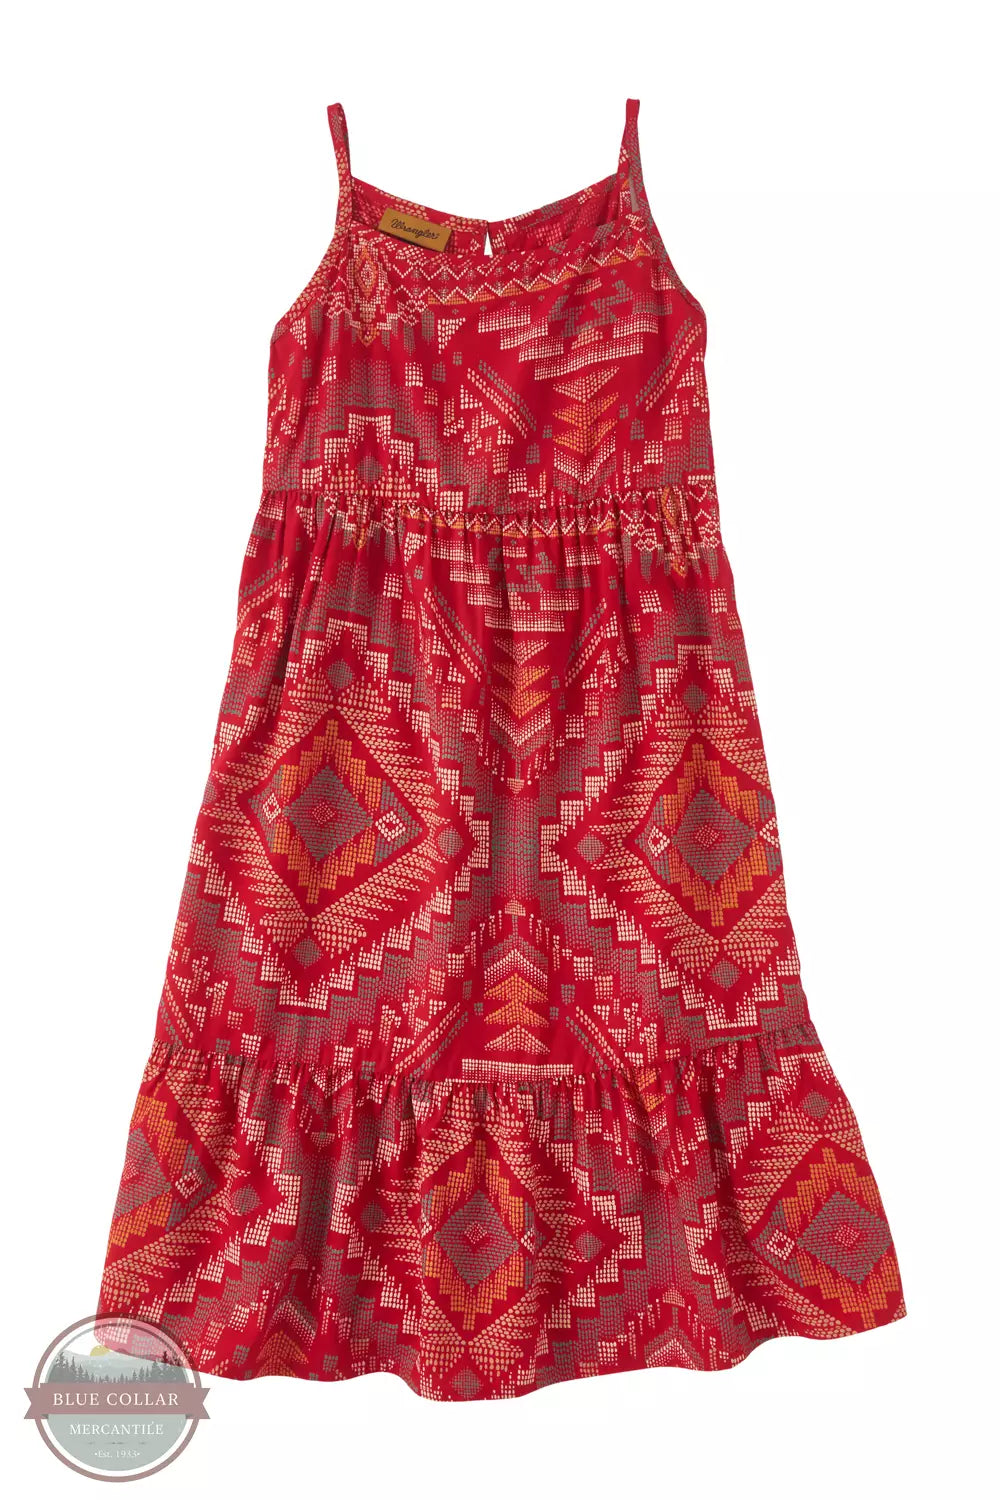 Wrangler 112346572 Colorful Aztec Print Sleeveless Dress Front View